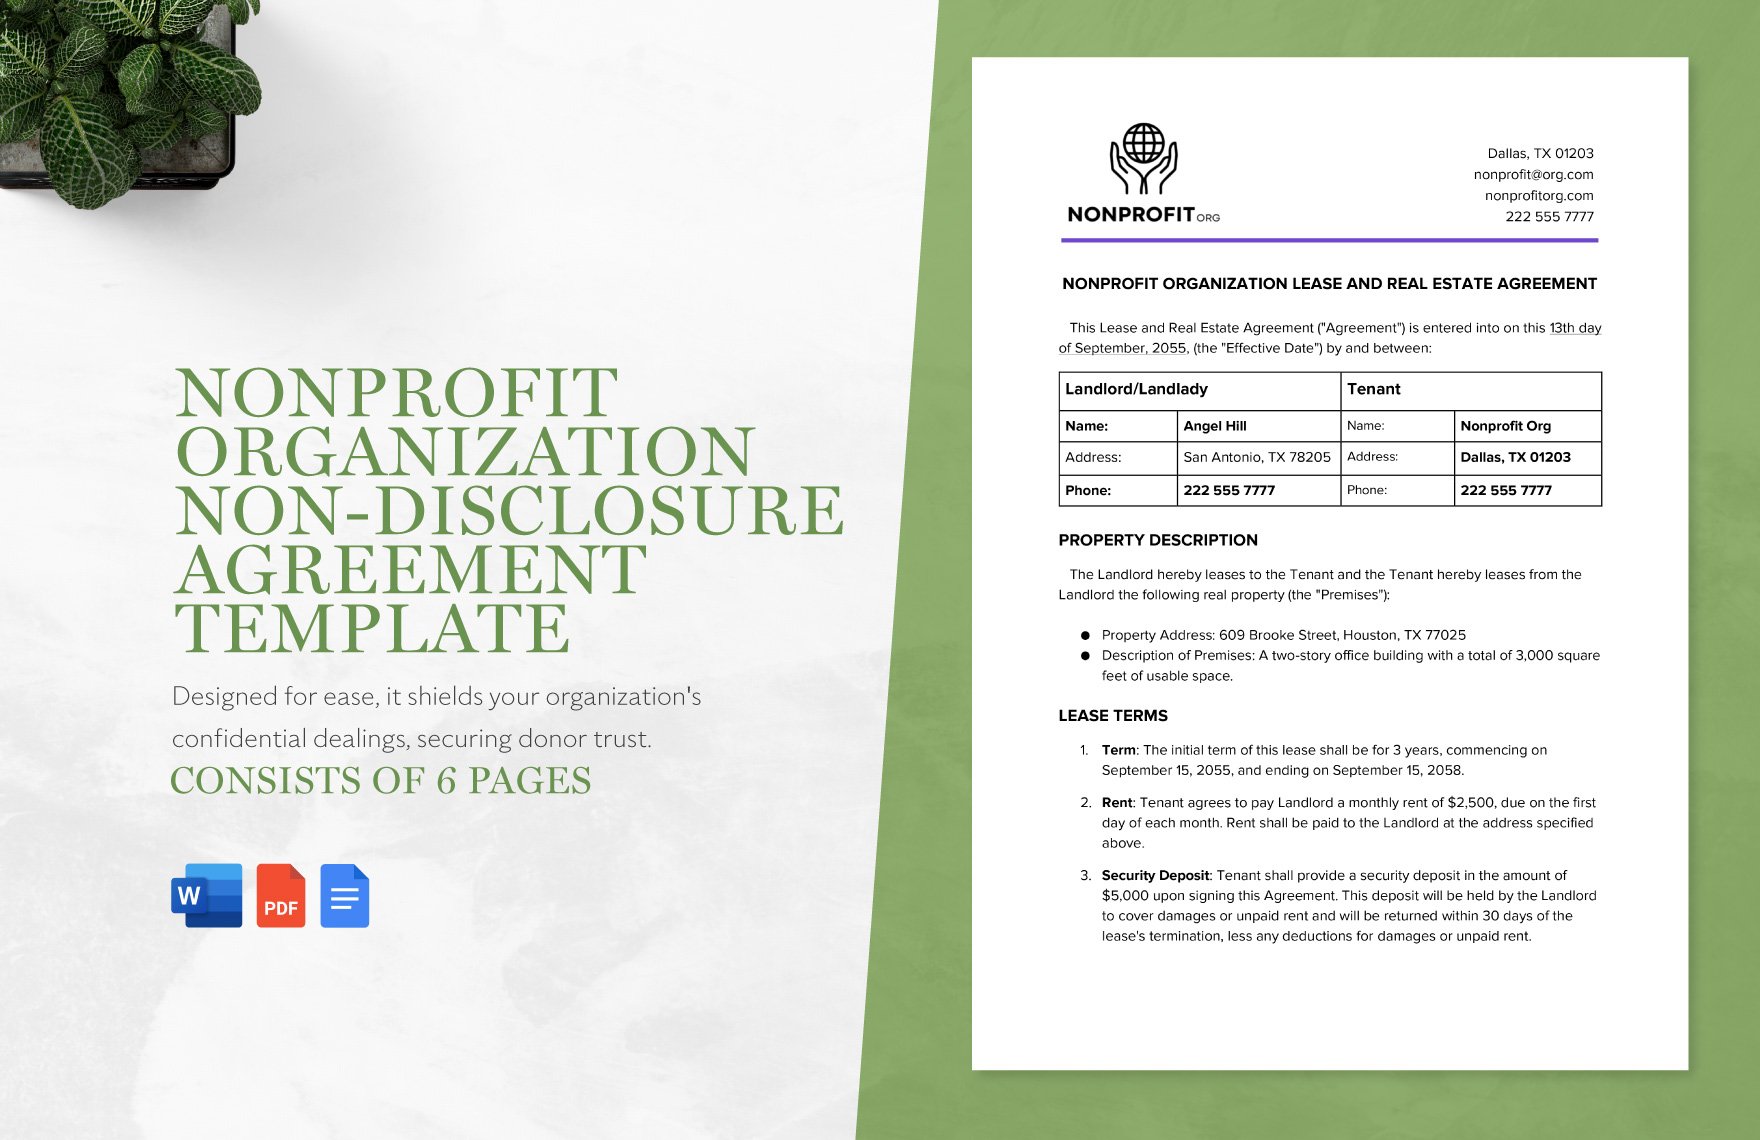 Nonprofit Organization Non-Disclosure Agreements Template